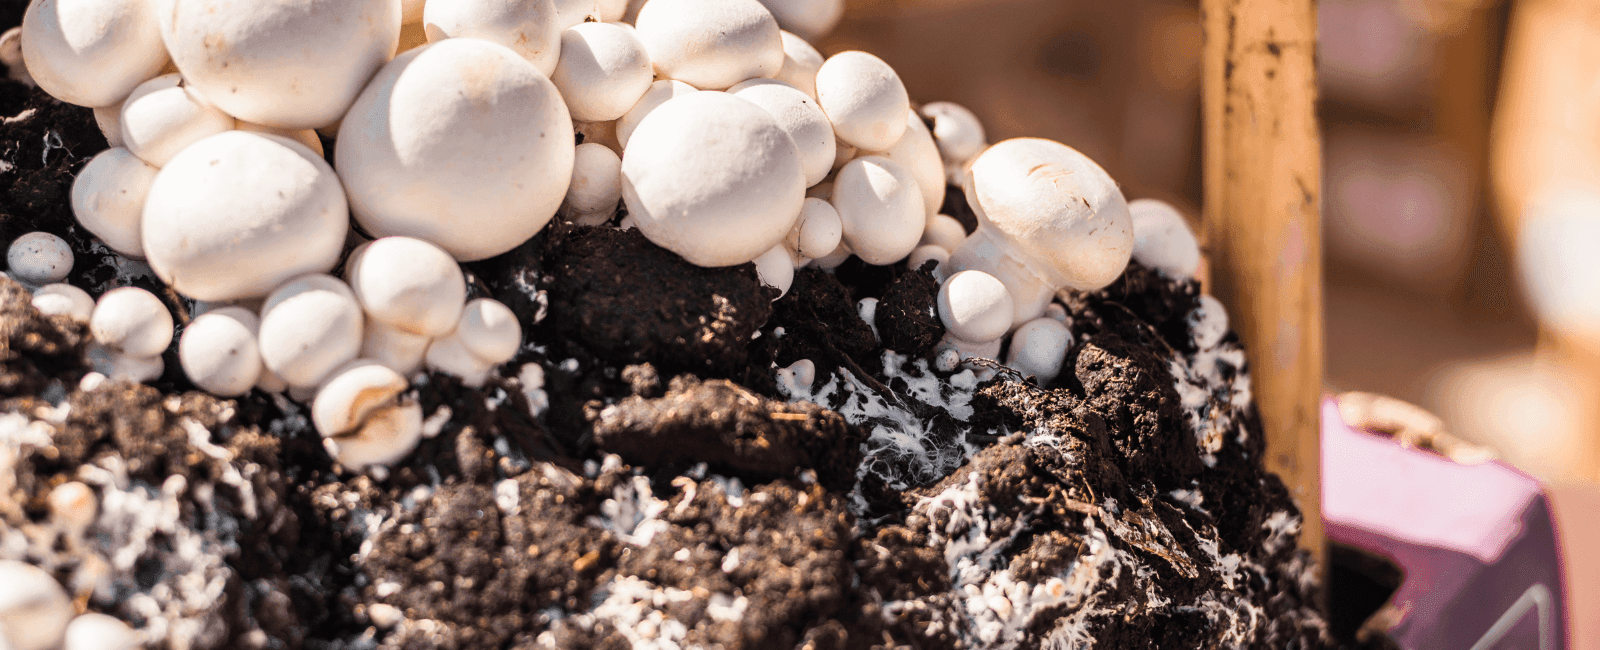 Mushroom Substrate Waste Proves Efficient at Breaking Down Water Pollutants